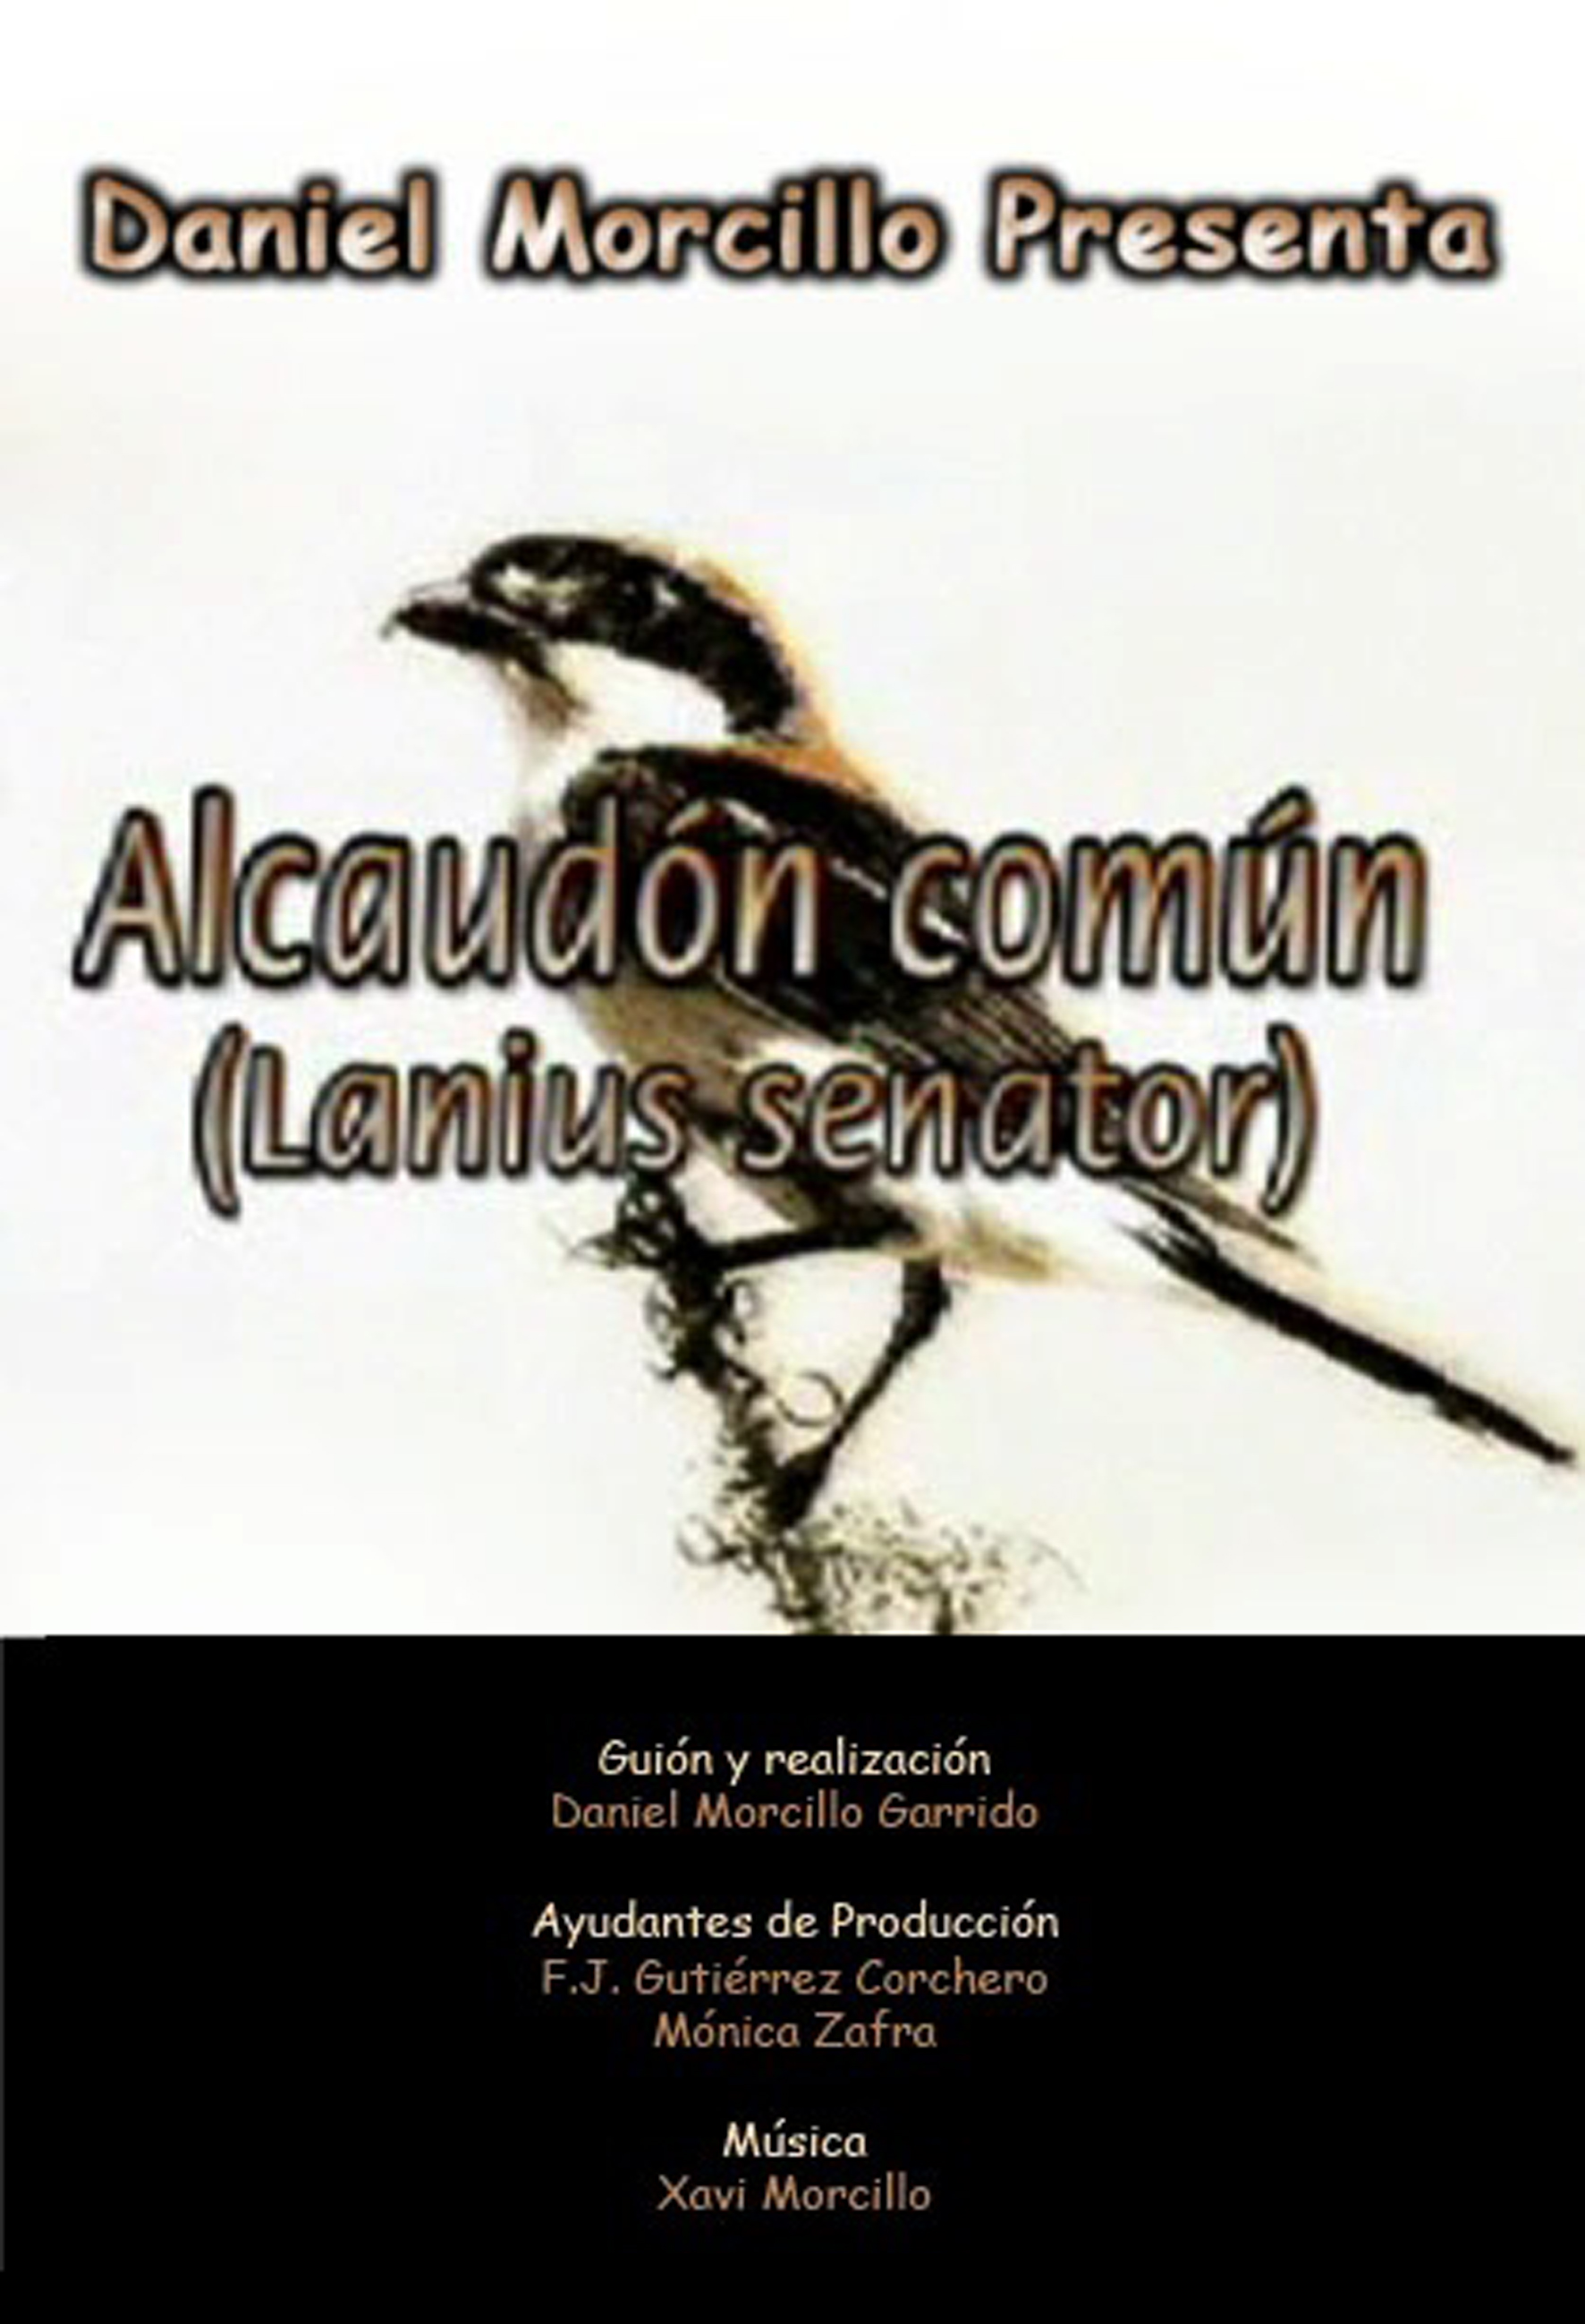 Alcaudón común (Lanius senator)